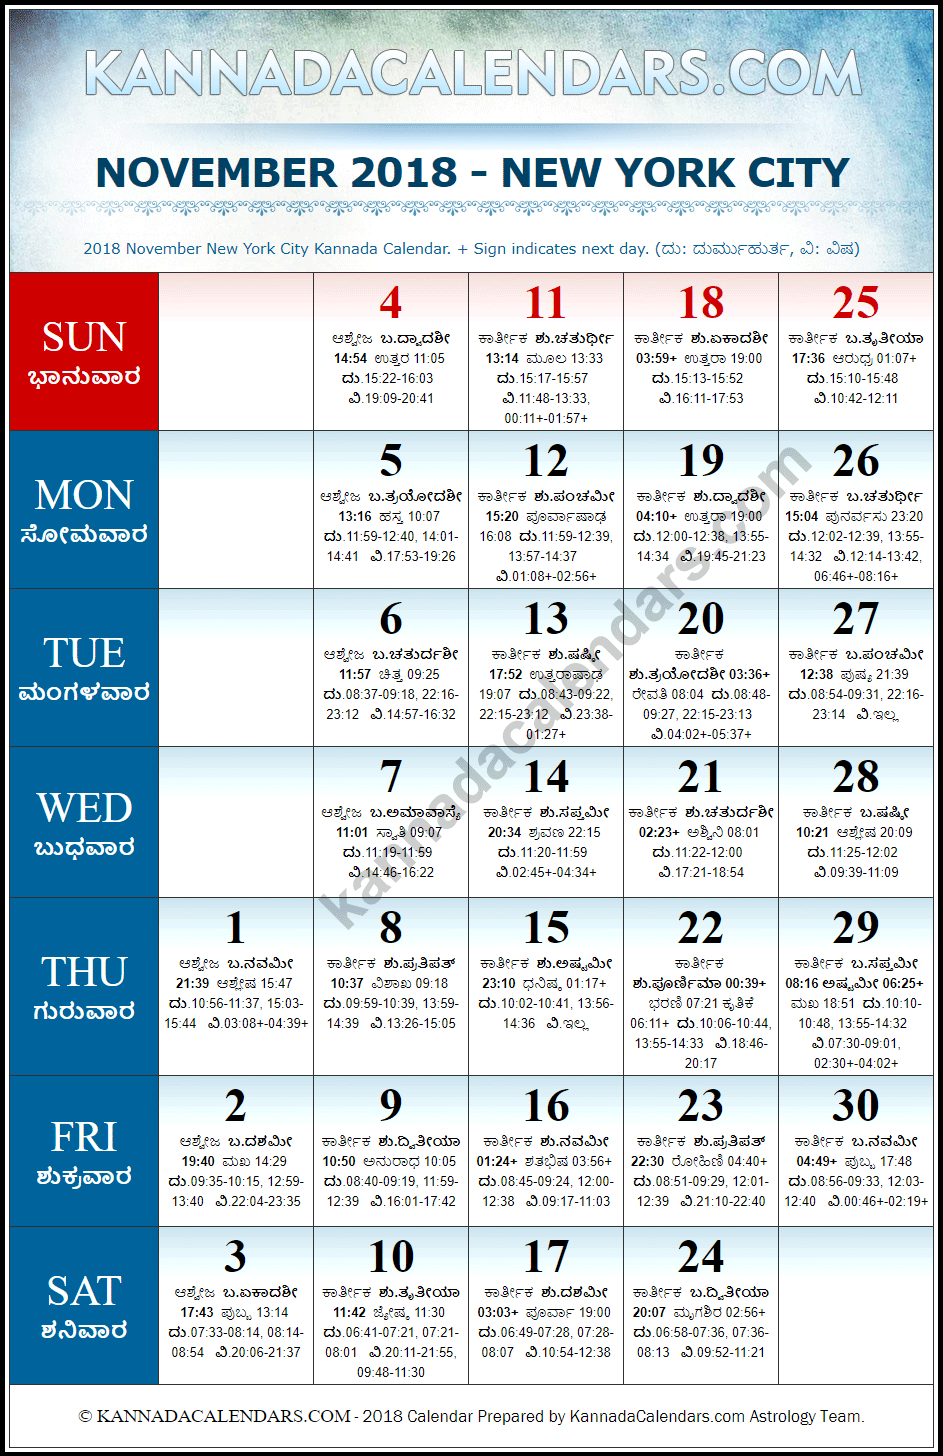 November 2018 Kannada Calendar for New York, USA